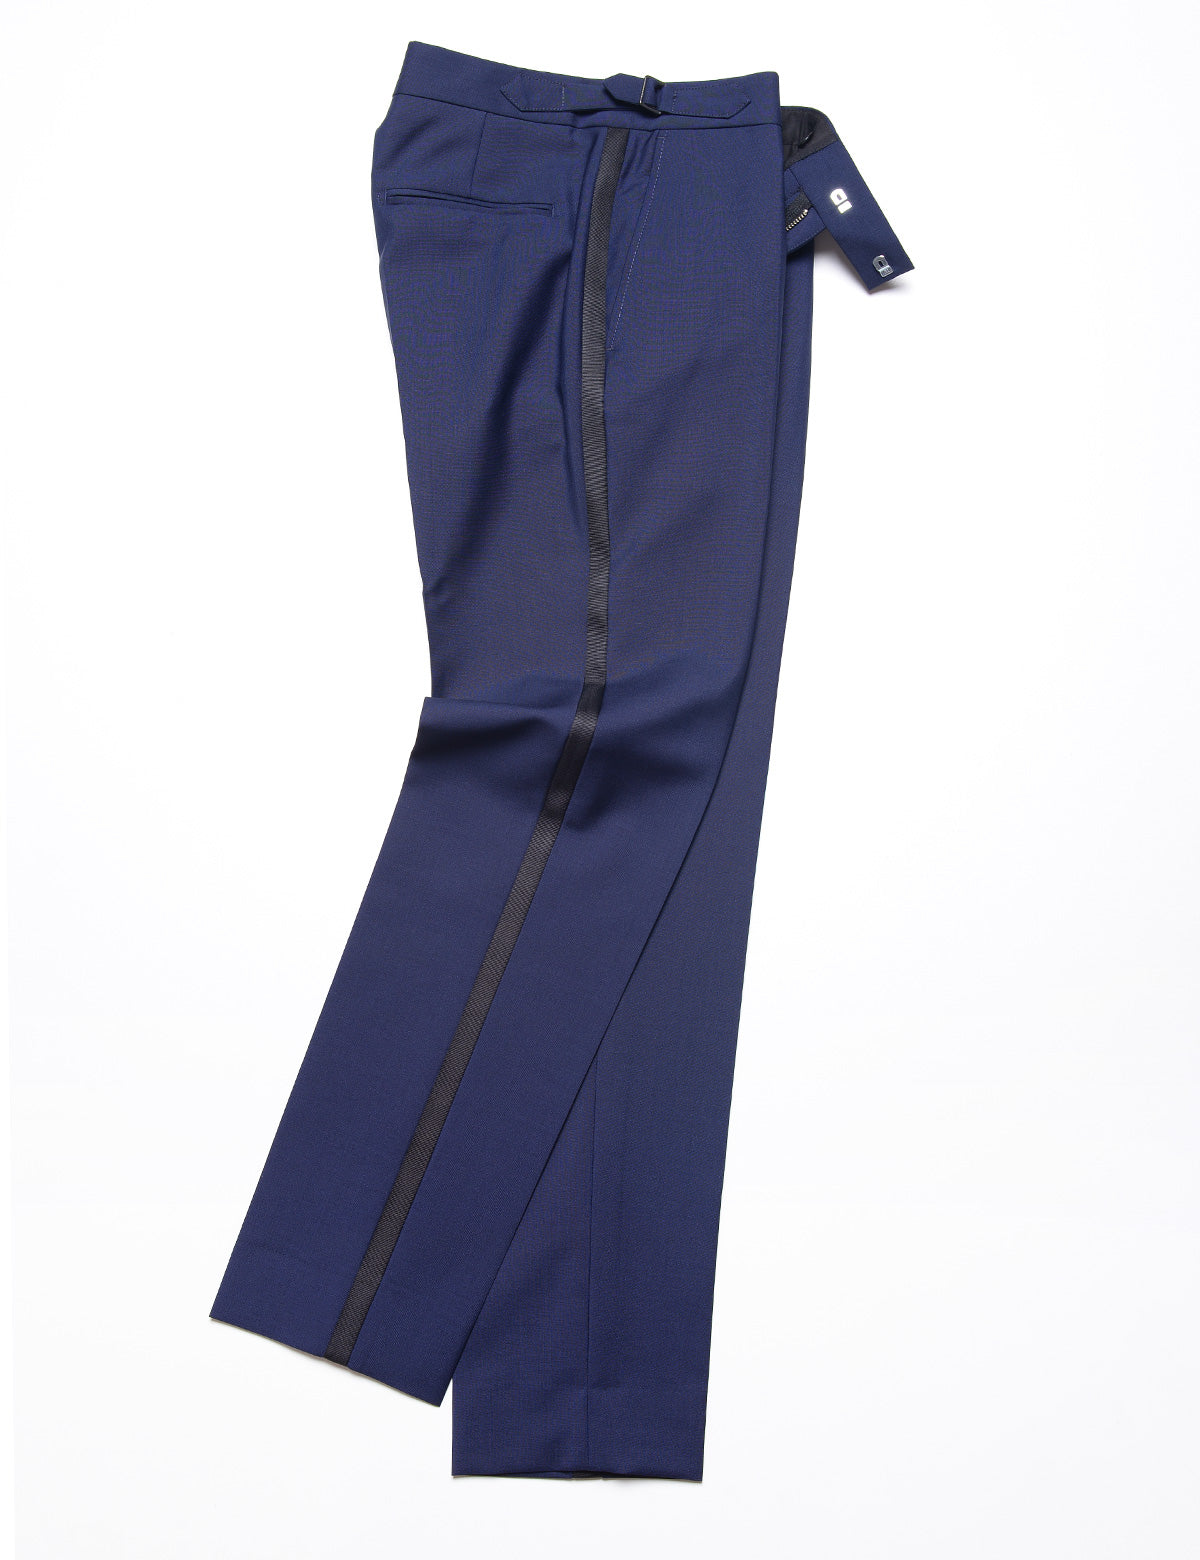 Brooklyn Tailors BKT50 Tuxedo Trouser in Wool / Mohair - Ink Blue with Grosgrain Stripe full length flat shot